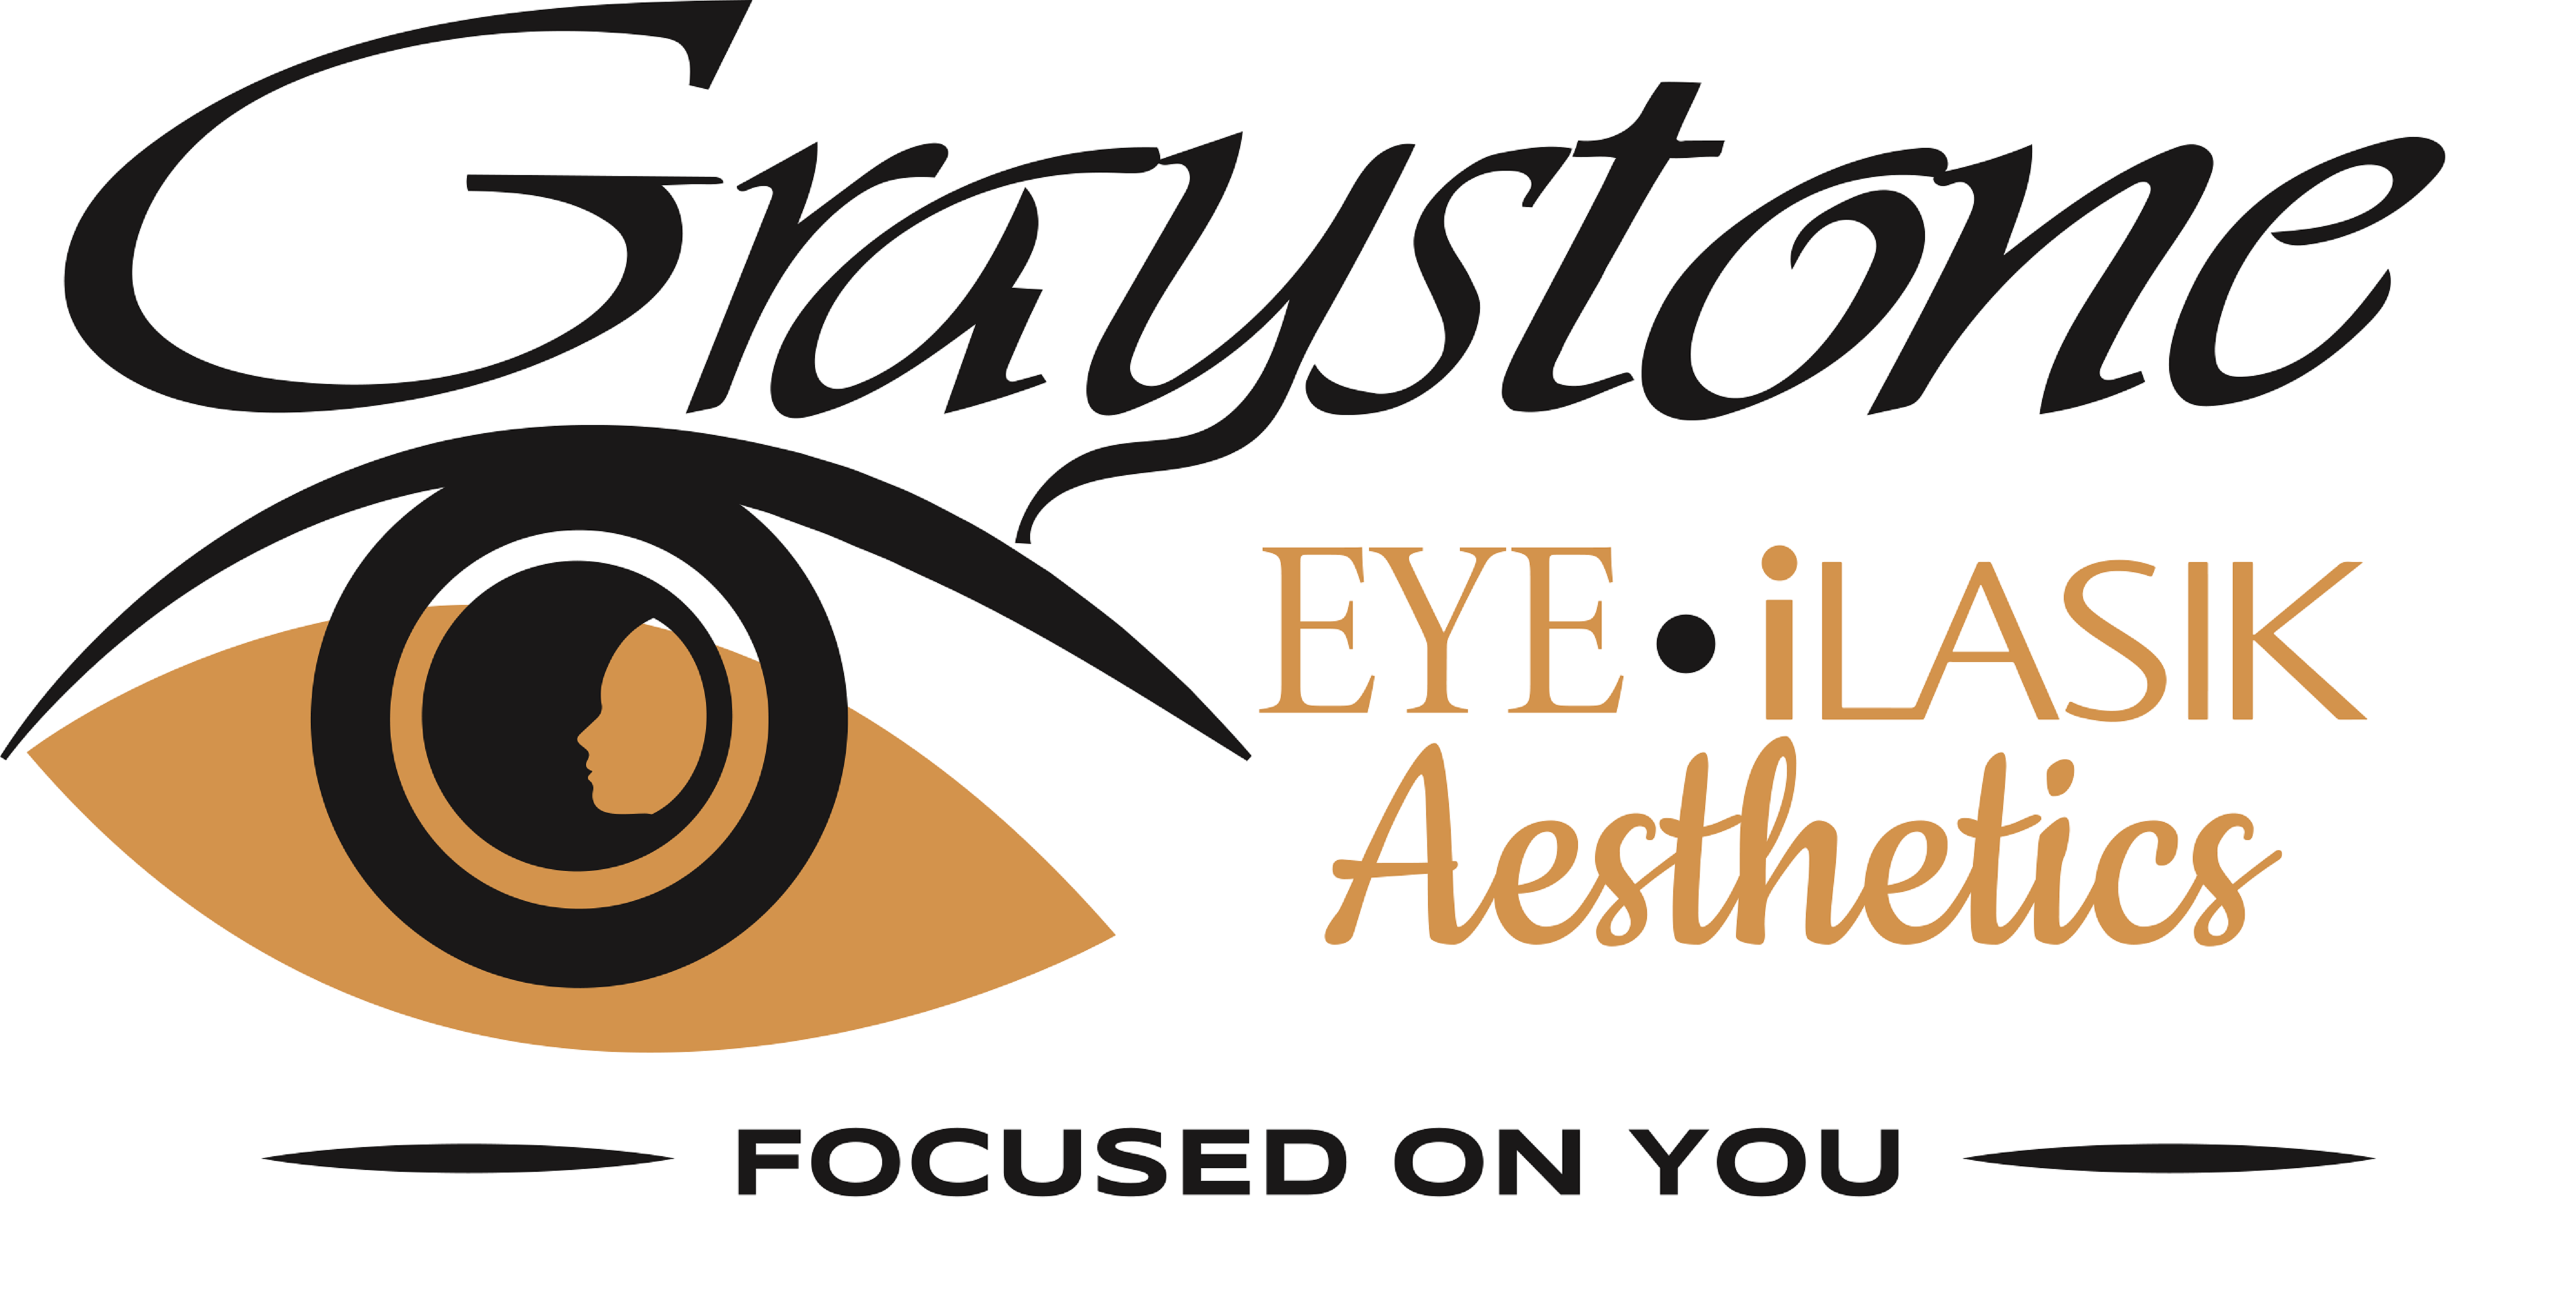 Graystone Eye Patient Survey